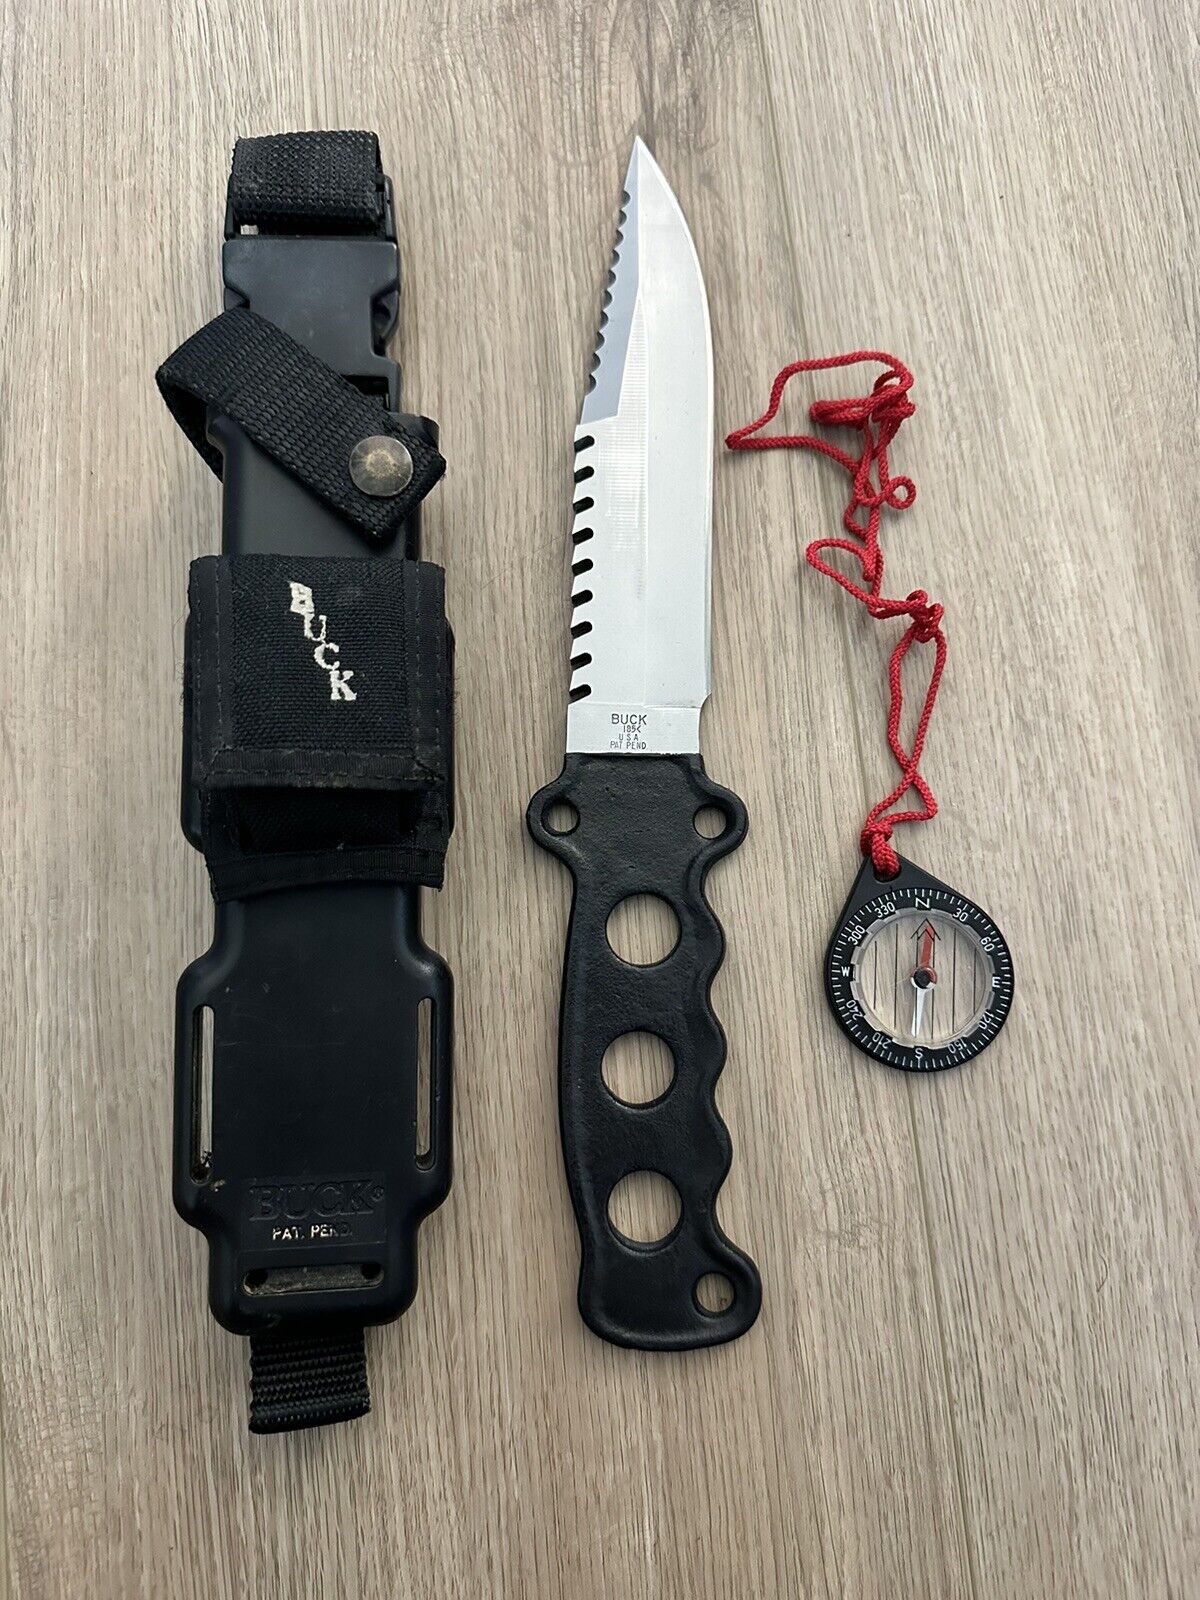 Rare BUCKMASTER 185  U.S.A. Pat Pending Survival Knife, W/ Sheath & Compass